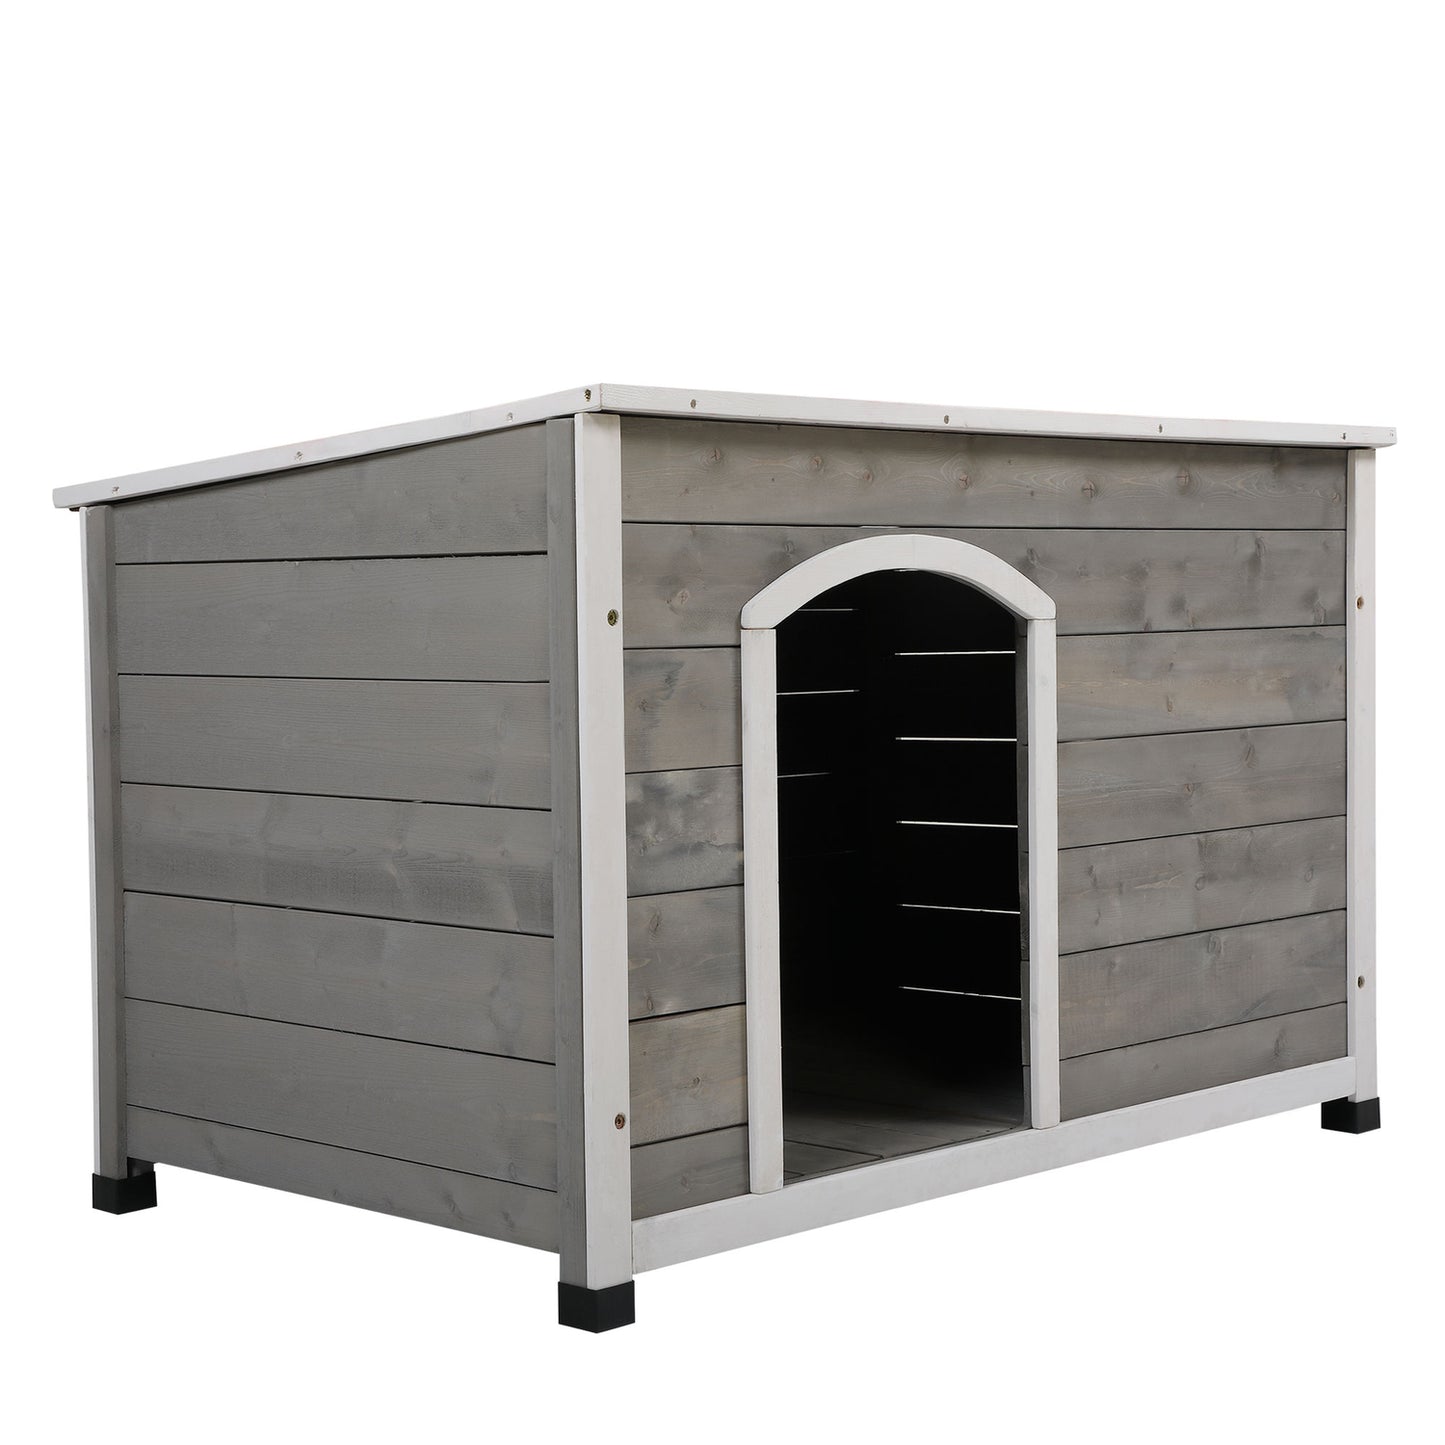 Docooler Outdoor Wood Dog House, Dog Cabin with Weatherproof Roof and Open Door, Easy To